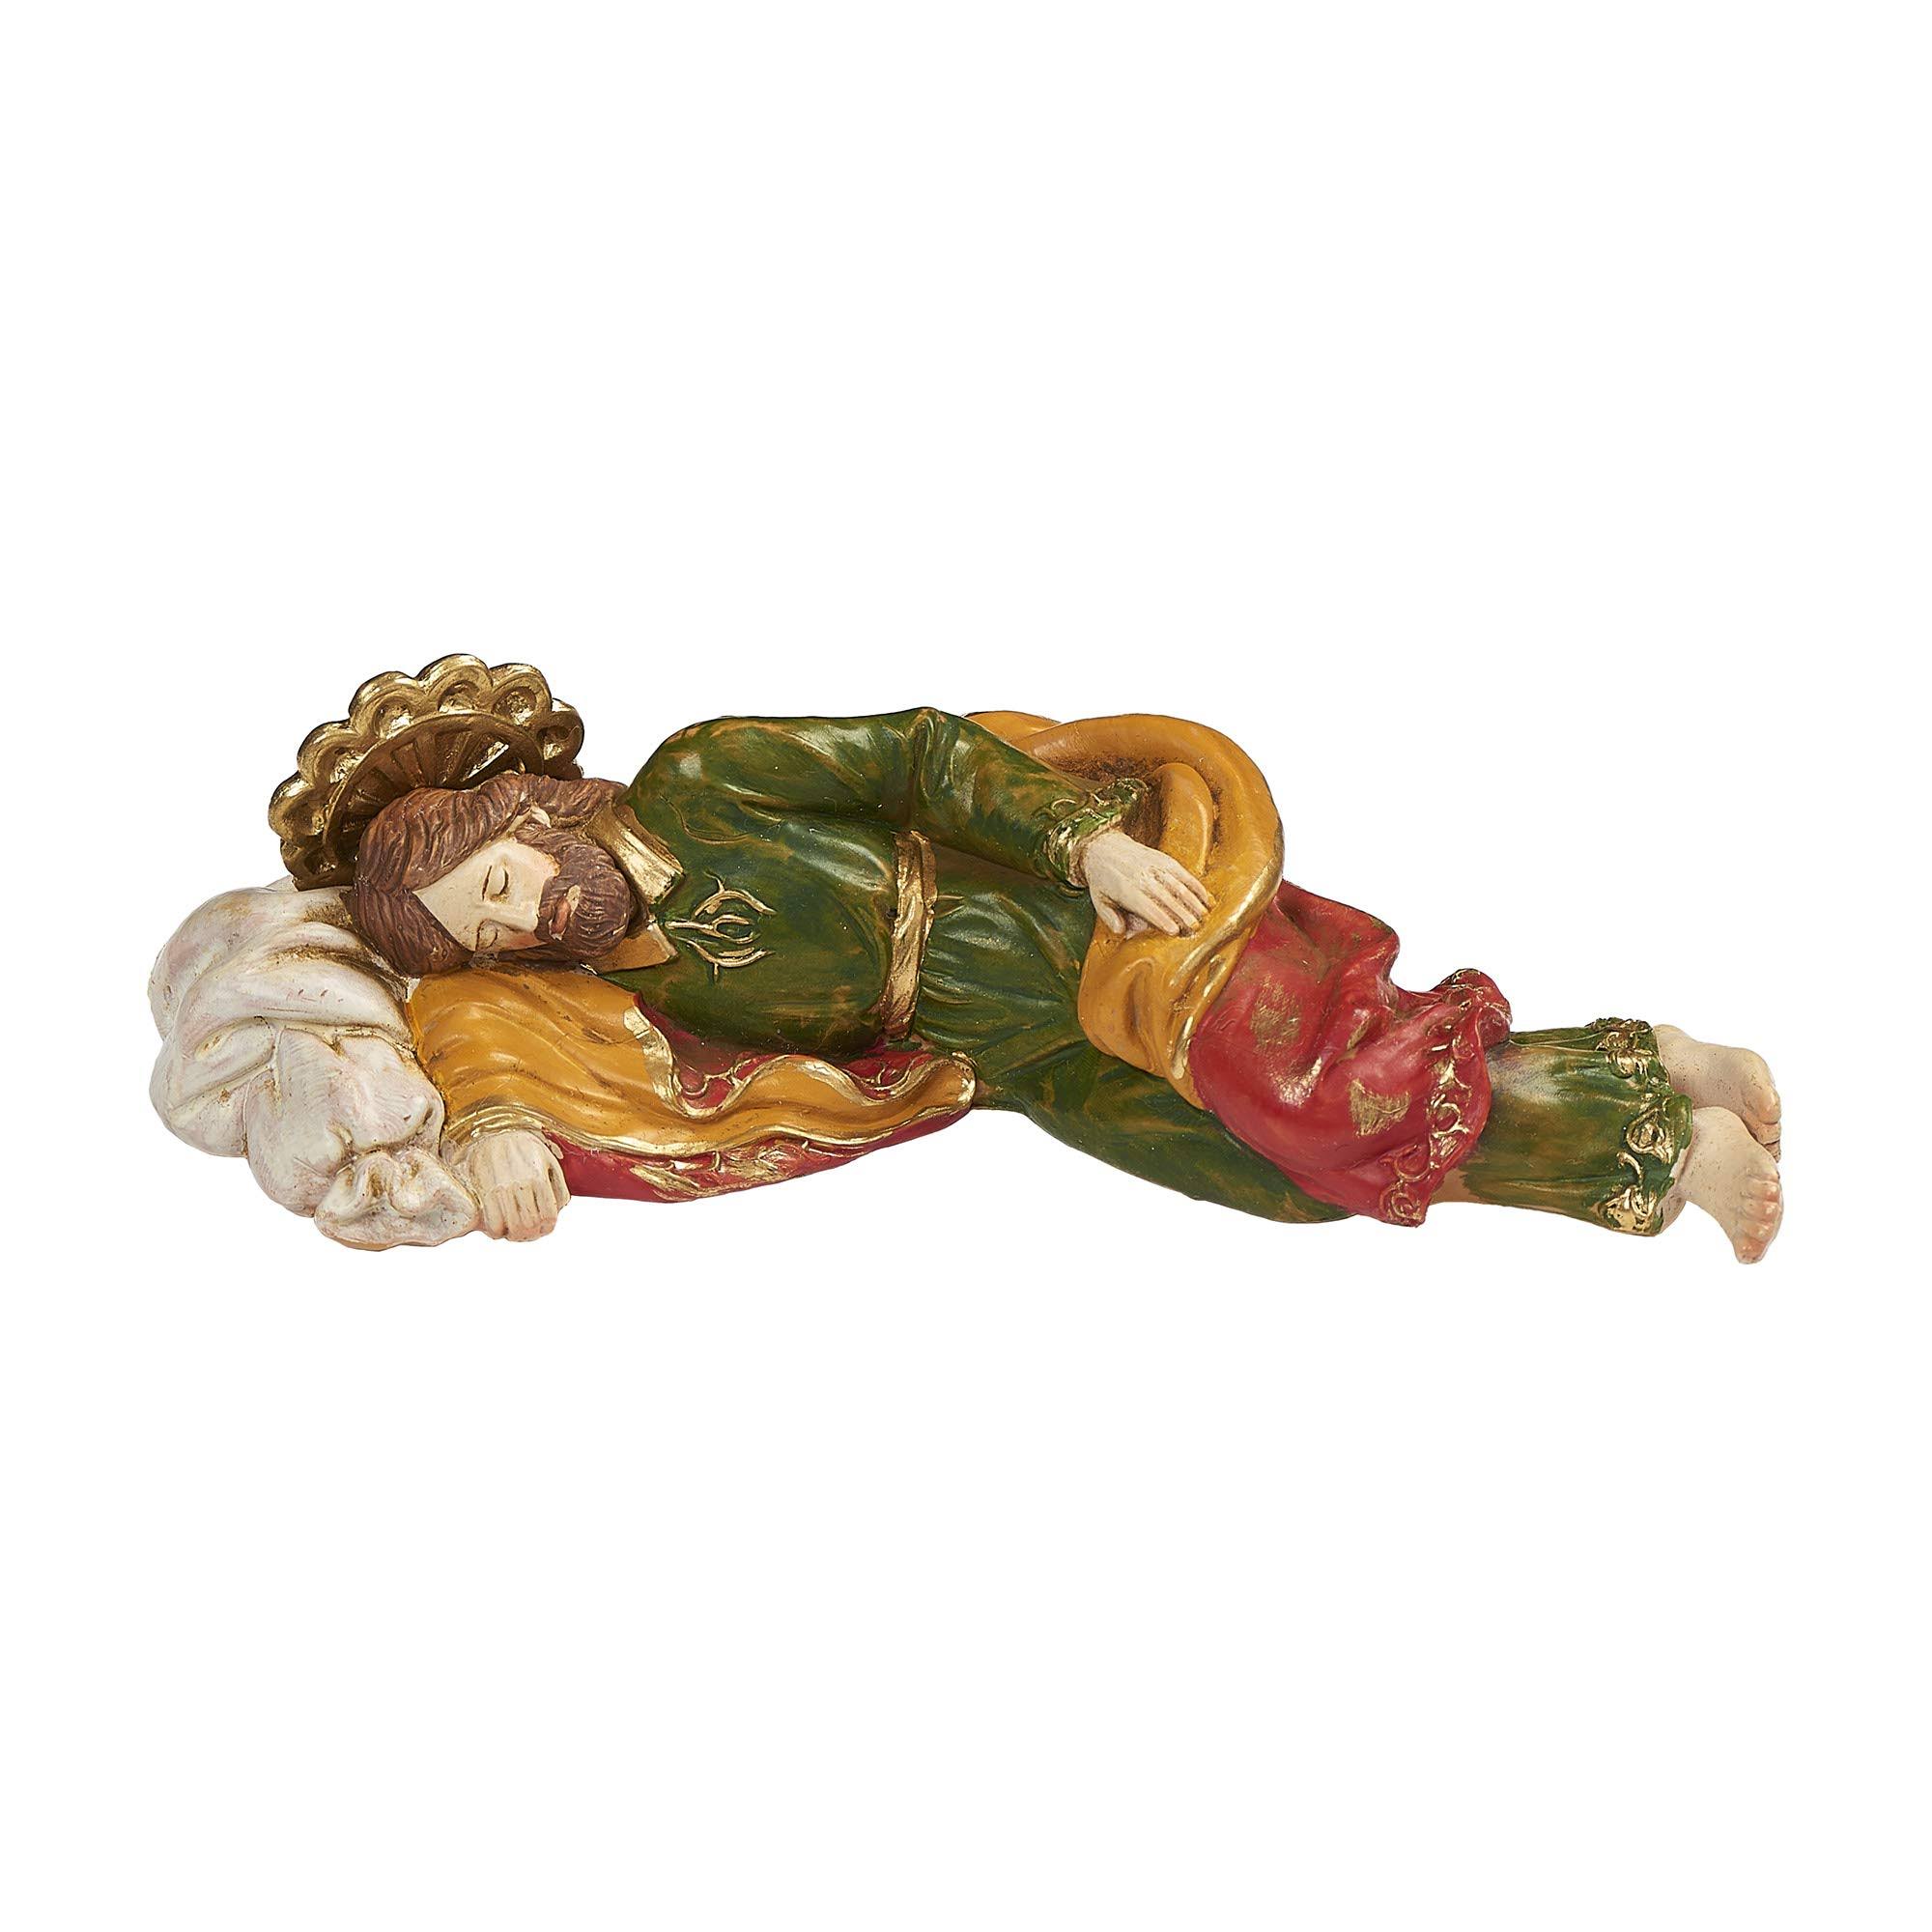 Fontanini Sleeping Saint Joseph Italian Religious Figurine